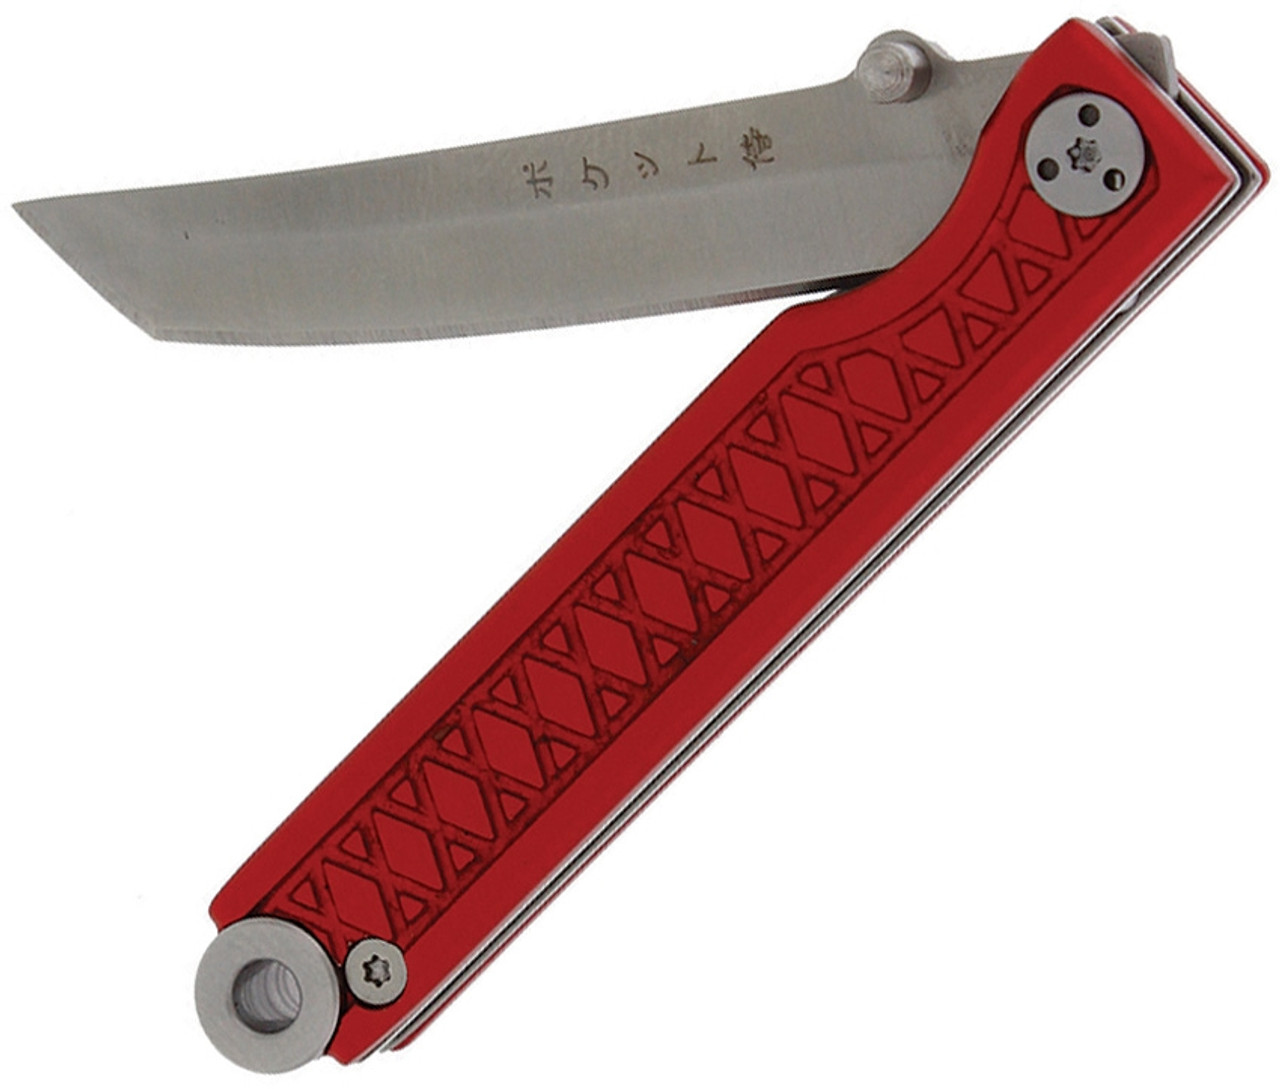 StatGear Pocket Samurai Folding Knife STAT106, 2.1" 44OC Satin Plain Blade, Red Aluminum Handle